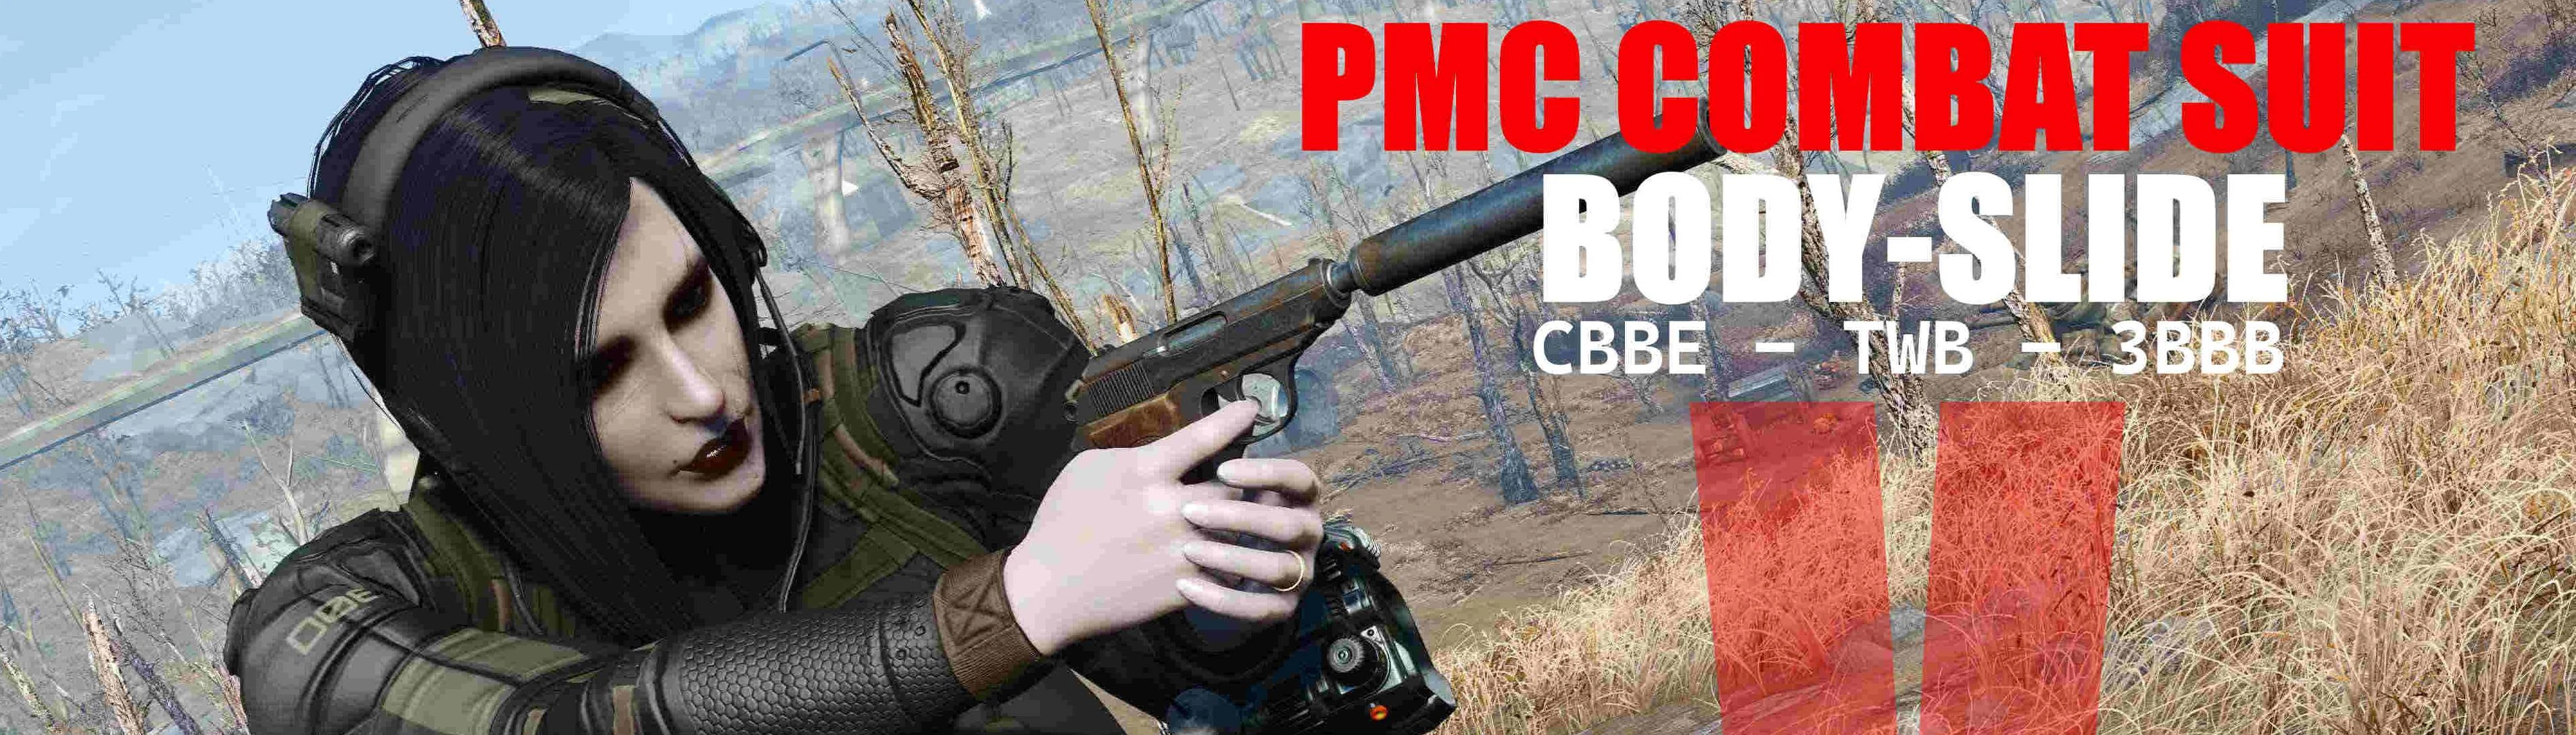 PMC Combat Suit - CBBE - TWB - 3BBB - BodySlide at Fallout 4 Nexus